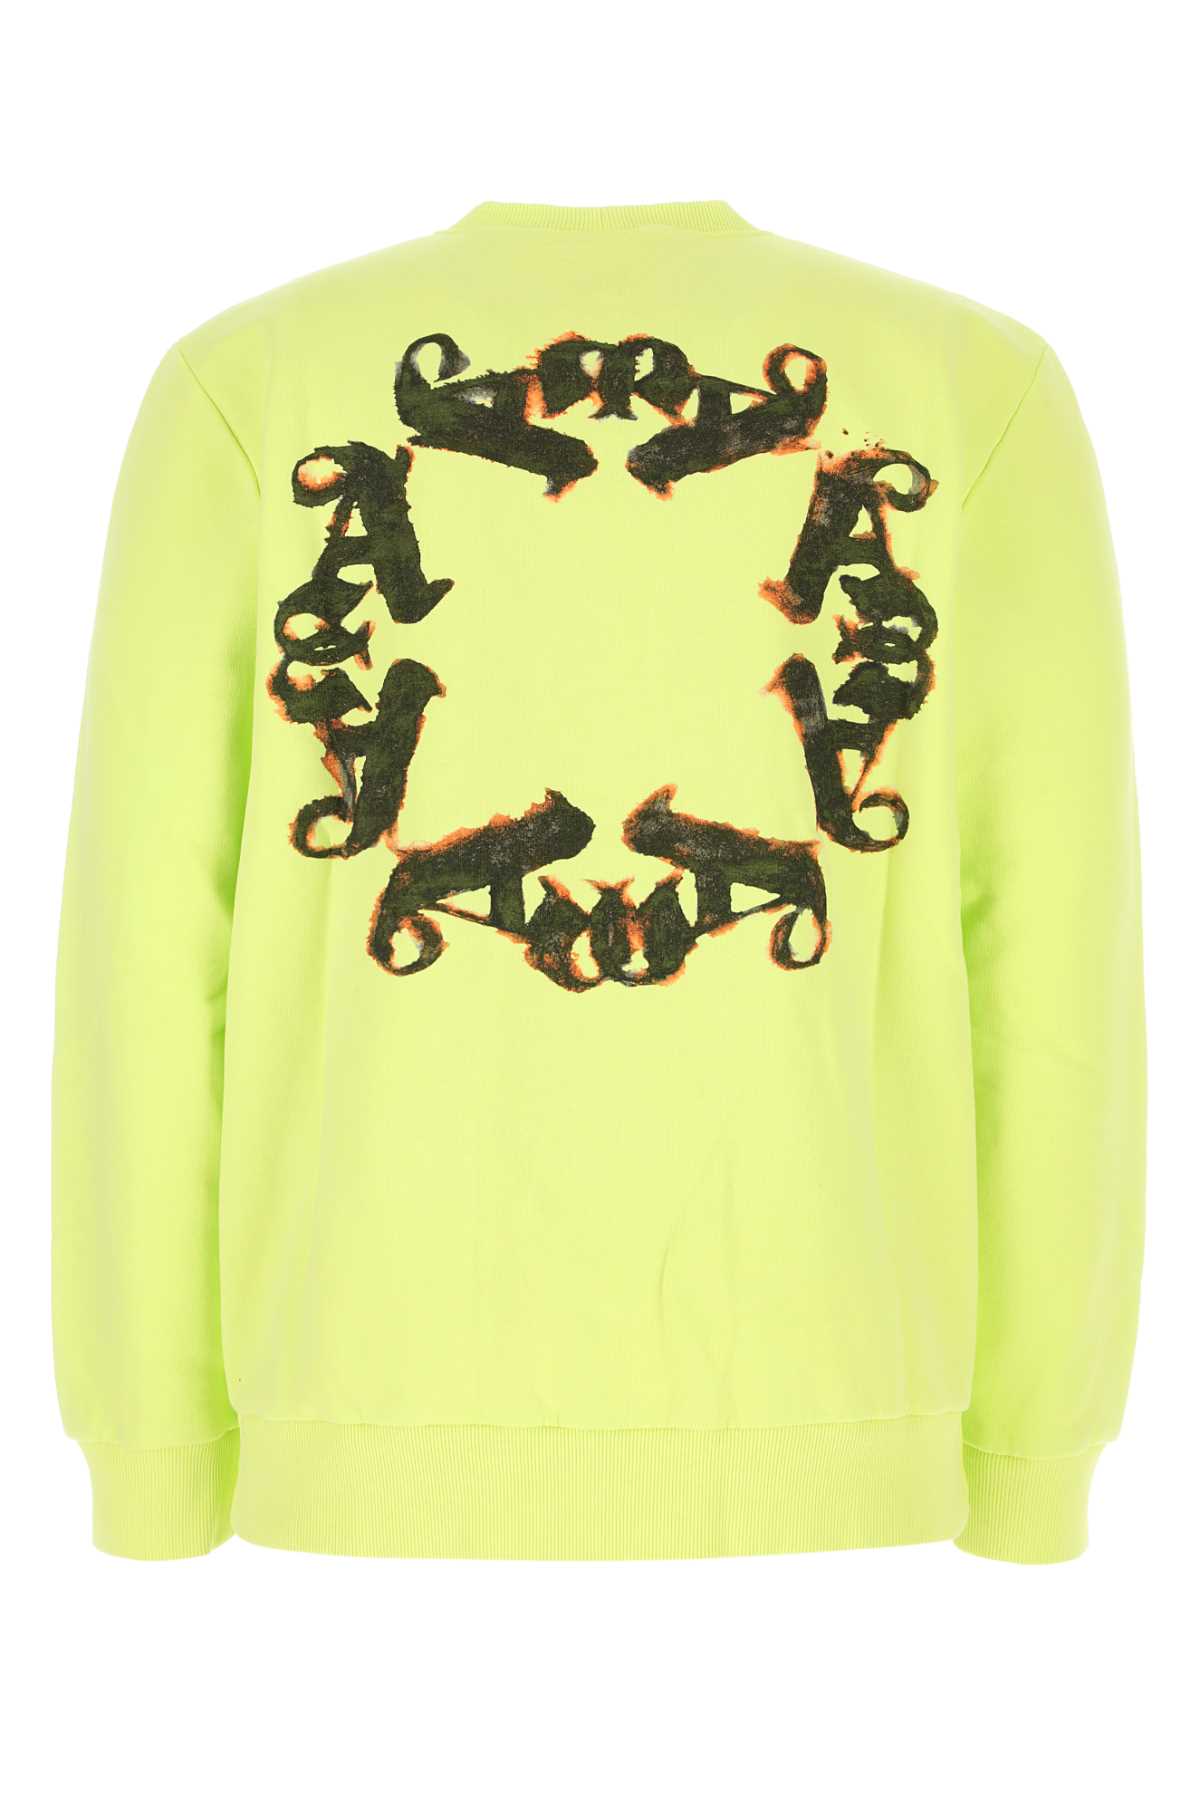 Alyx Fluo Yellow Cotton Oversize Sweatshirt In Ylw0041